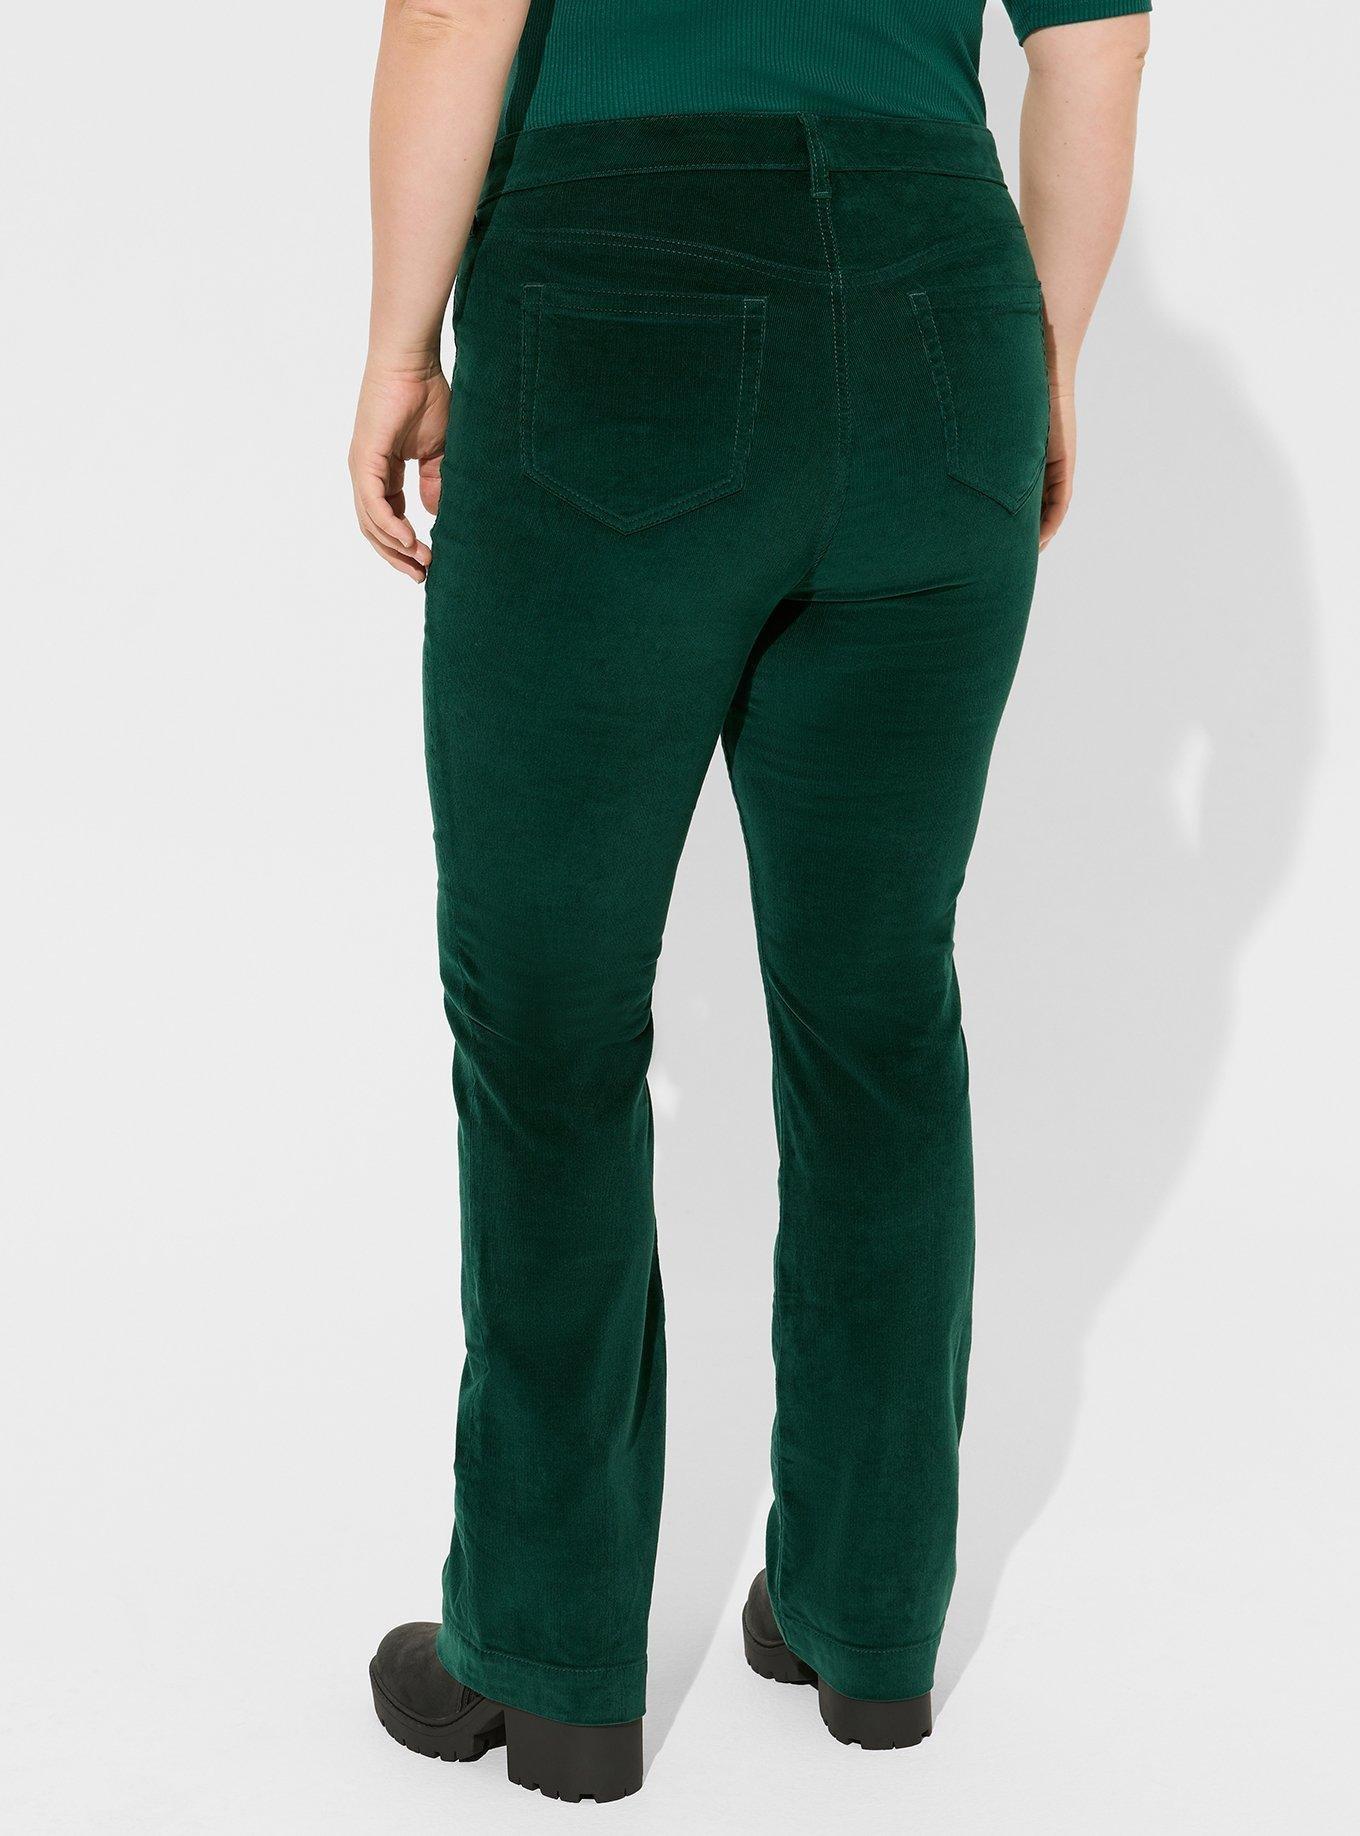 Women's Corduroy Pants for sale in Denmark, Wisconsin, Facebook  Marketplace